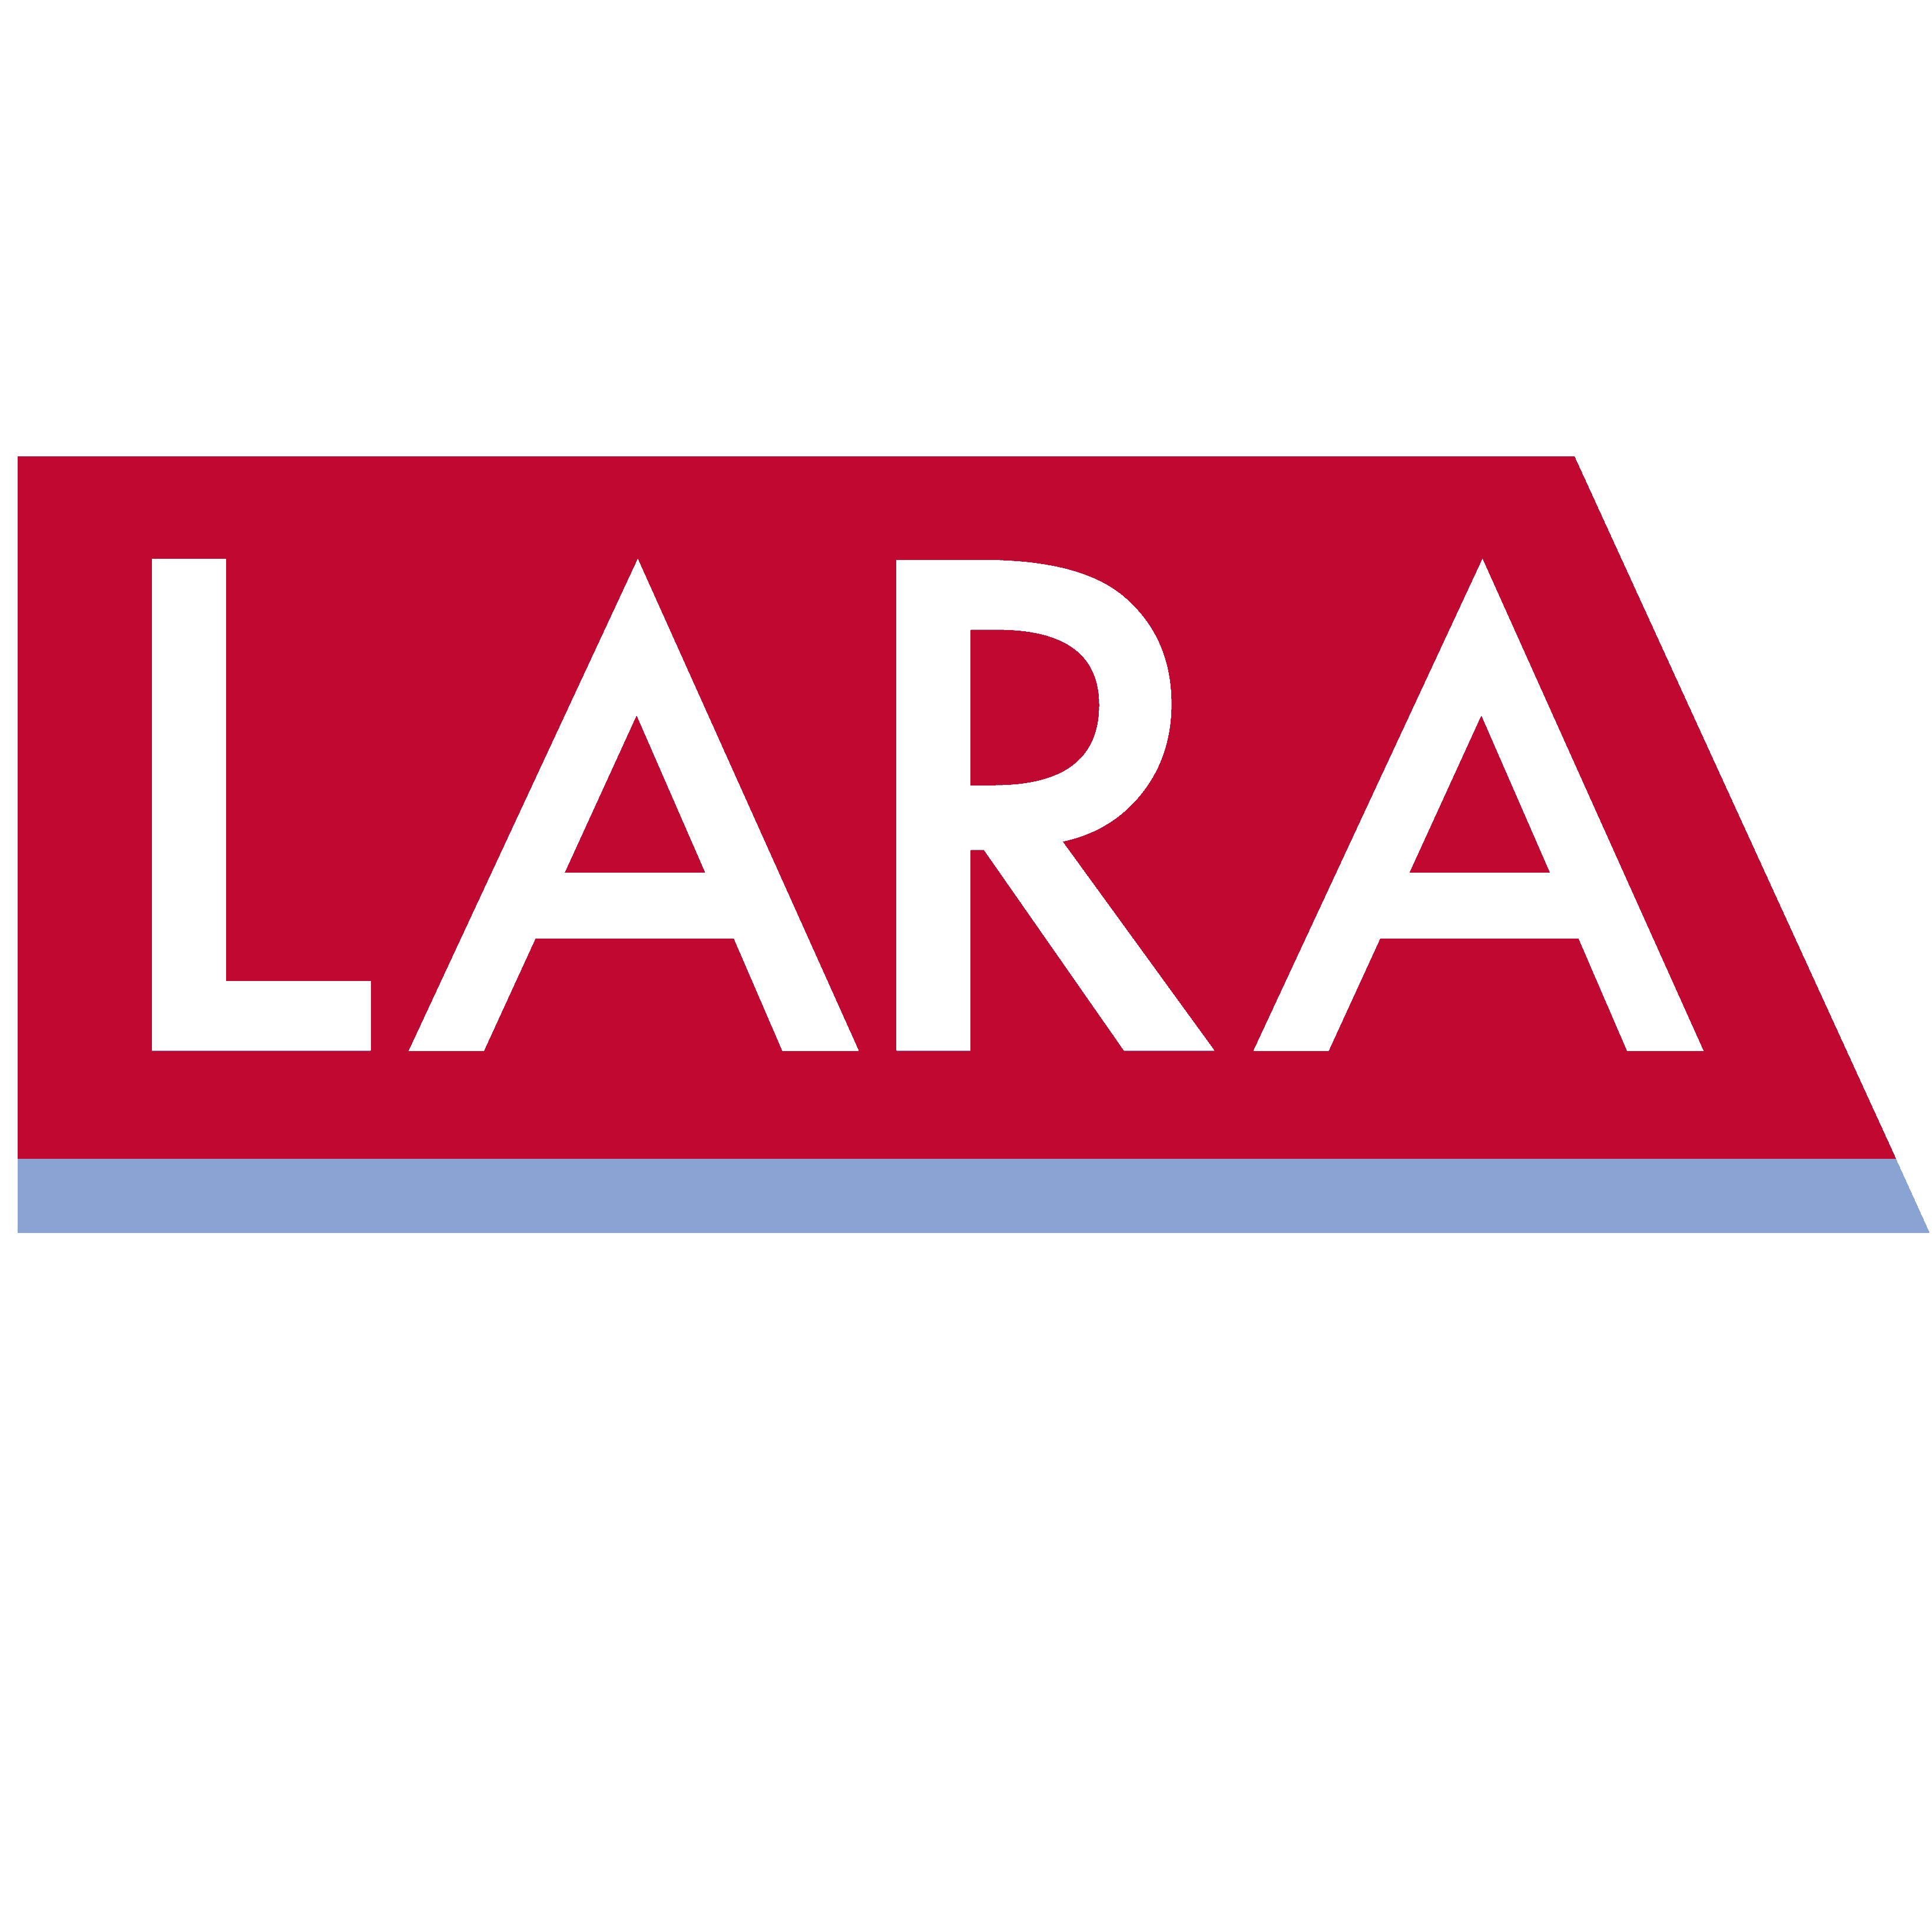 LARA News